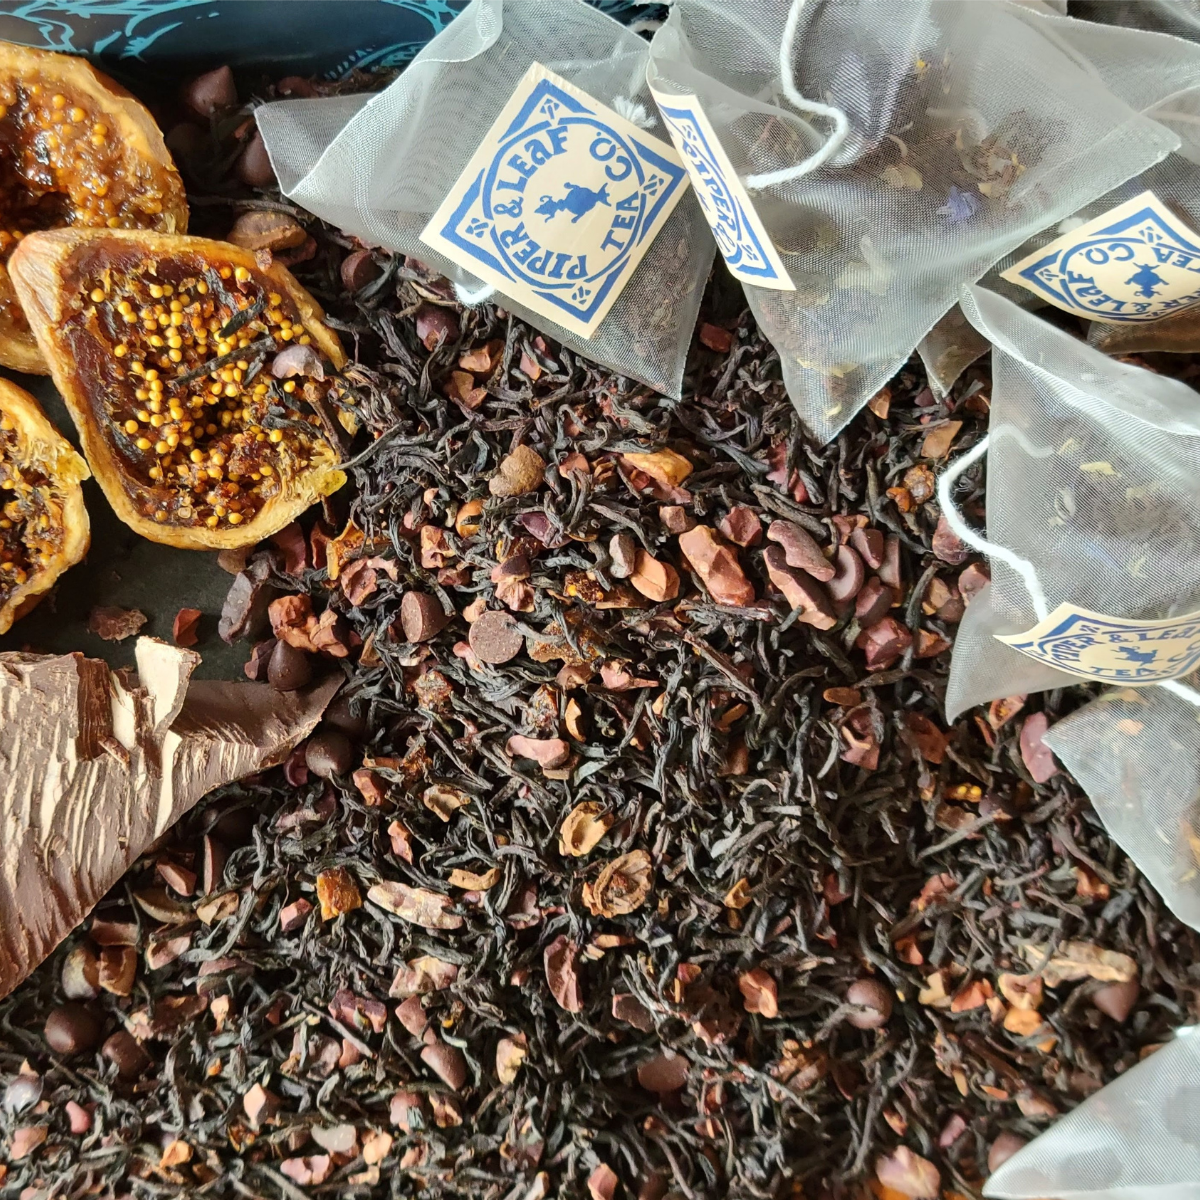 chocola-tea loose leaf next to figs, chocolate and sachet bags